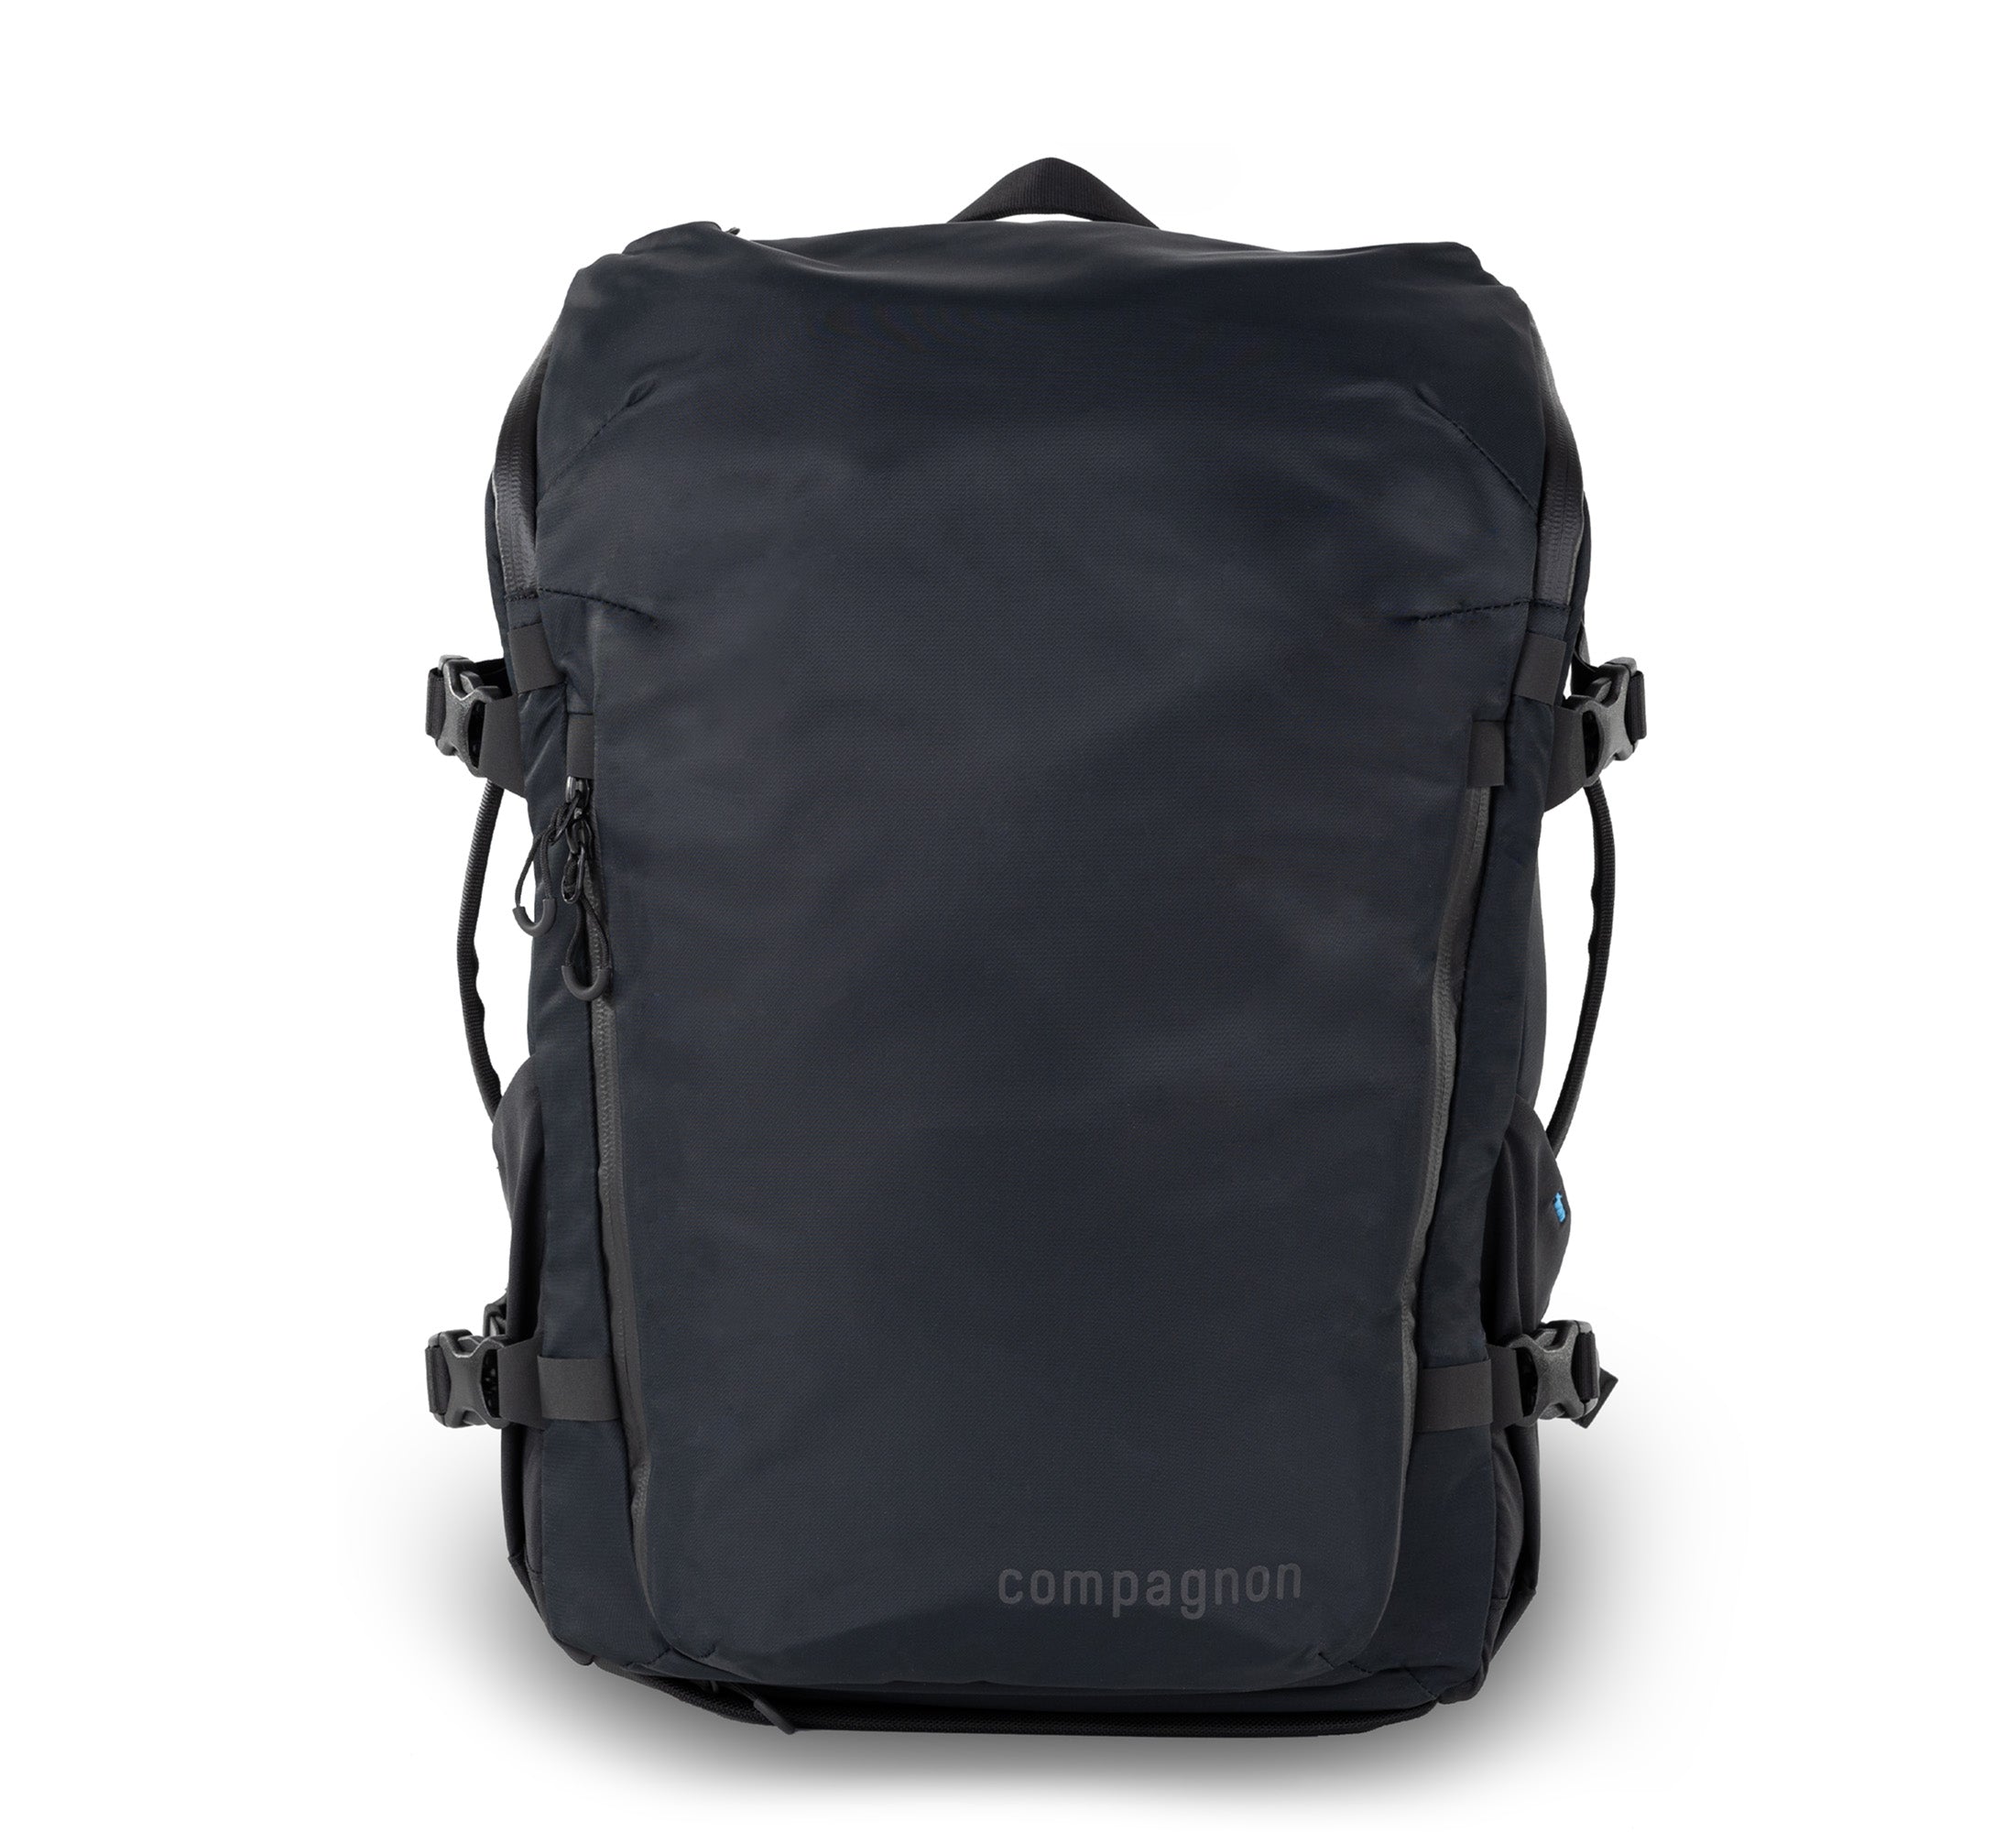 Adapt backpack 25L - Versatile travel & camera backpack